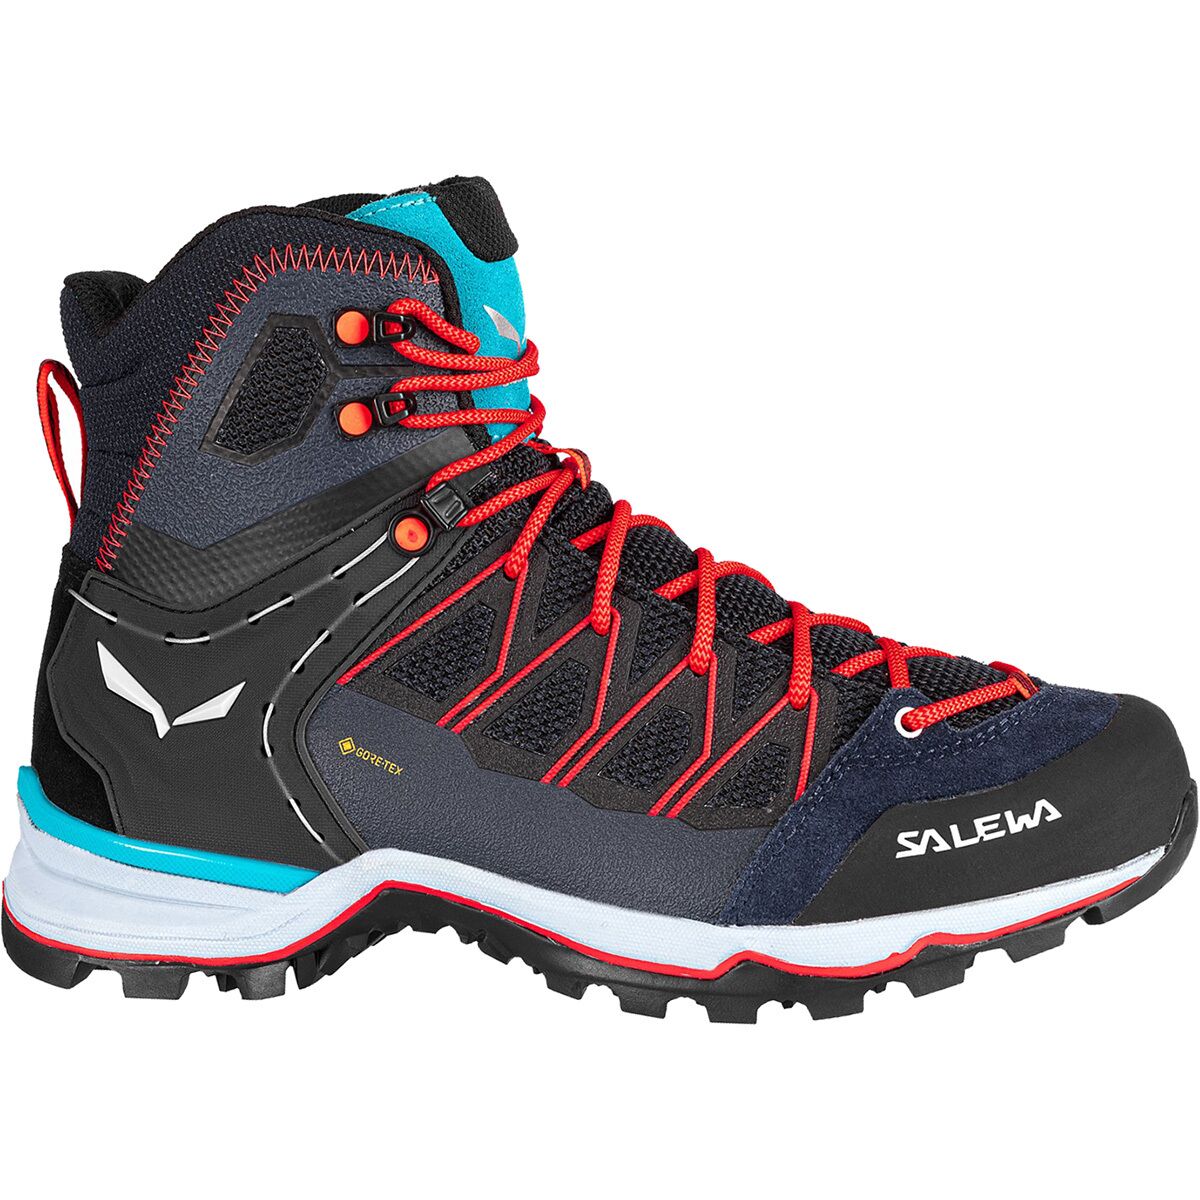 Mountain Trainer Lite Mid GTX Hiking Boot - Women